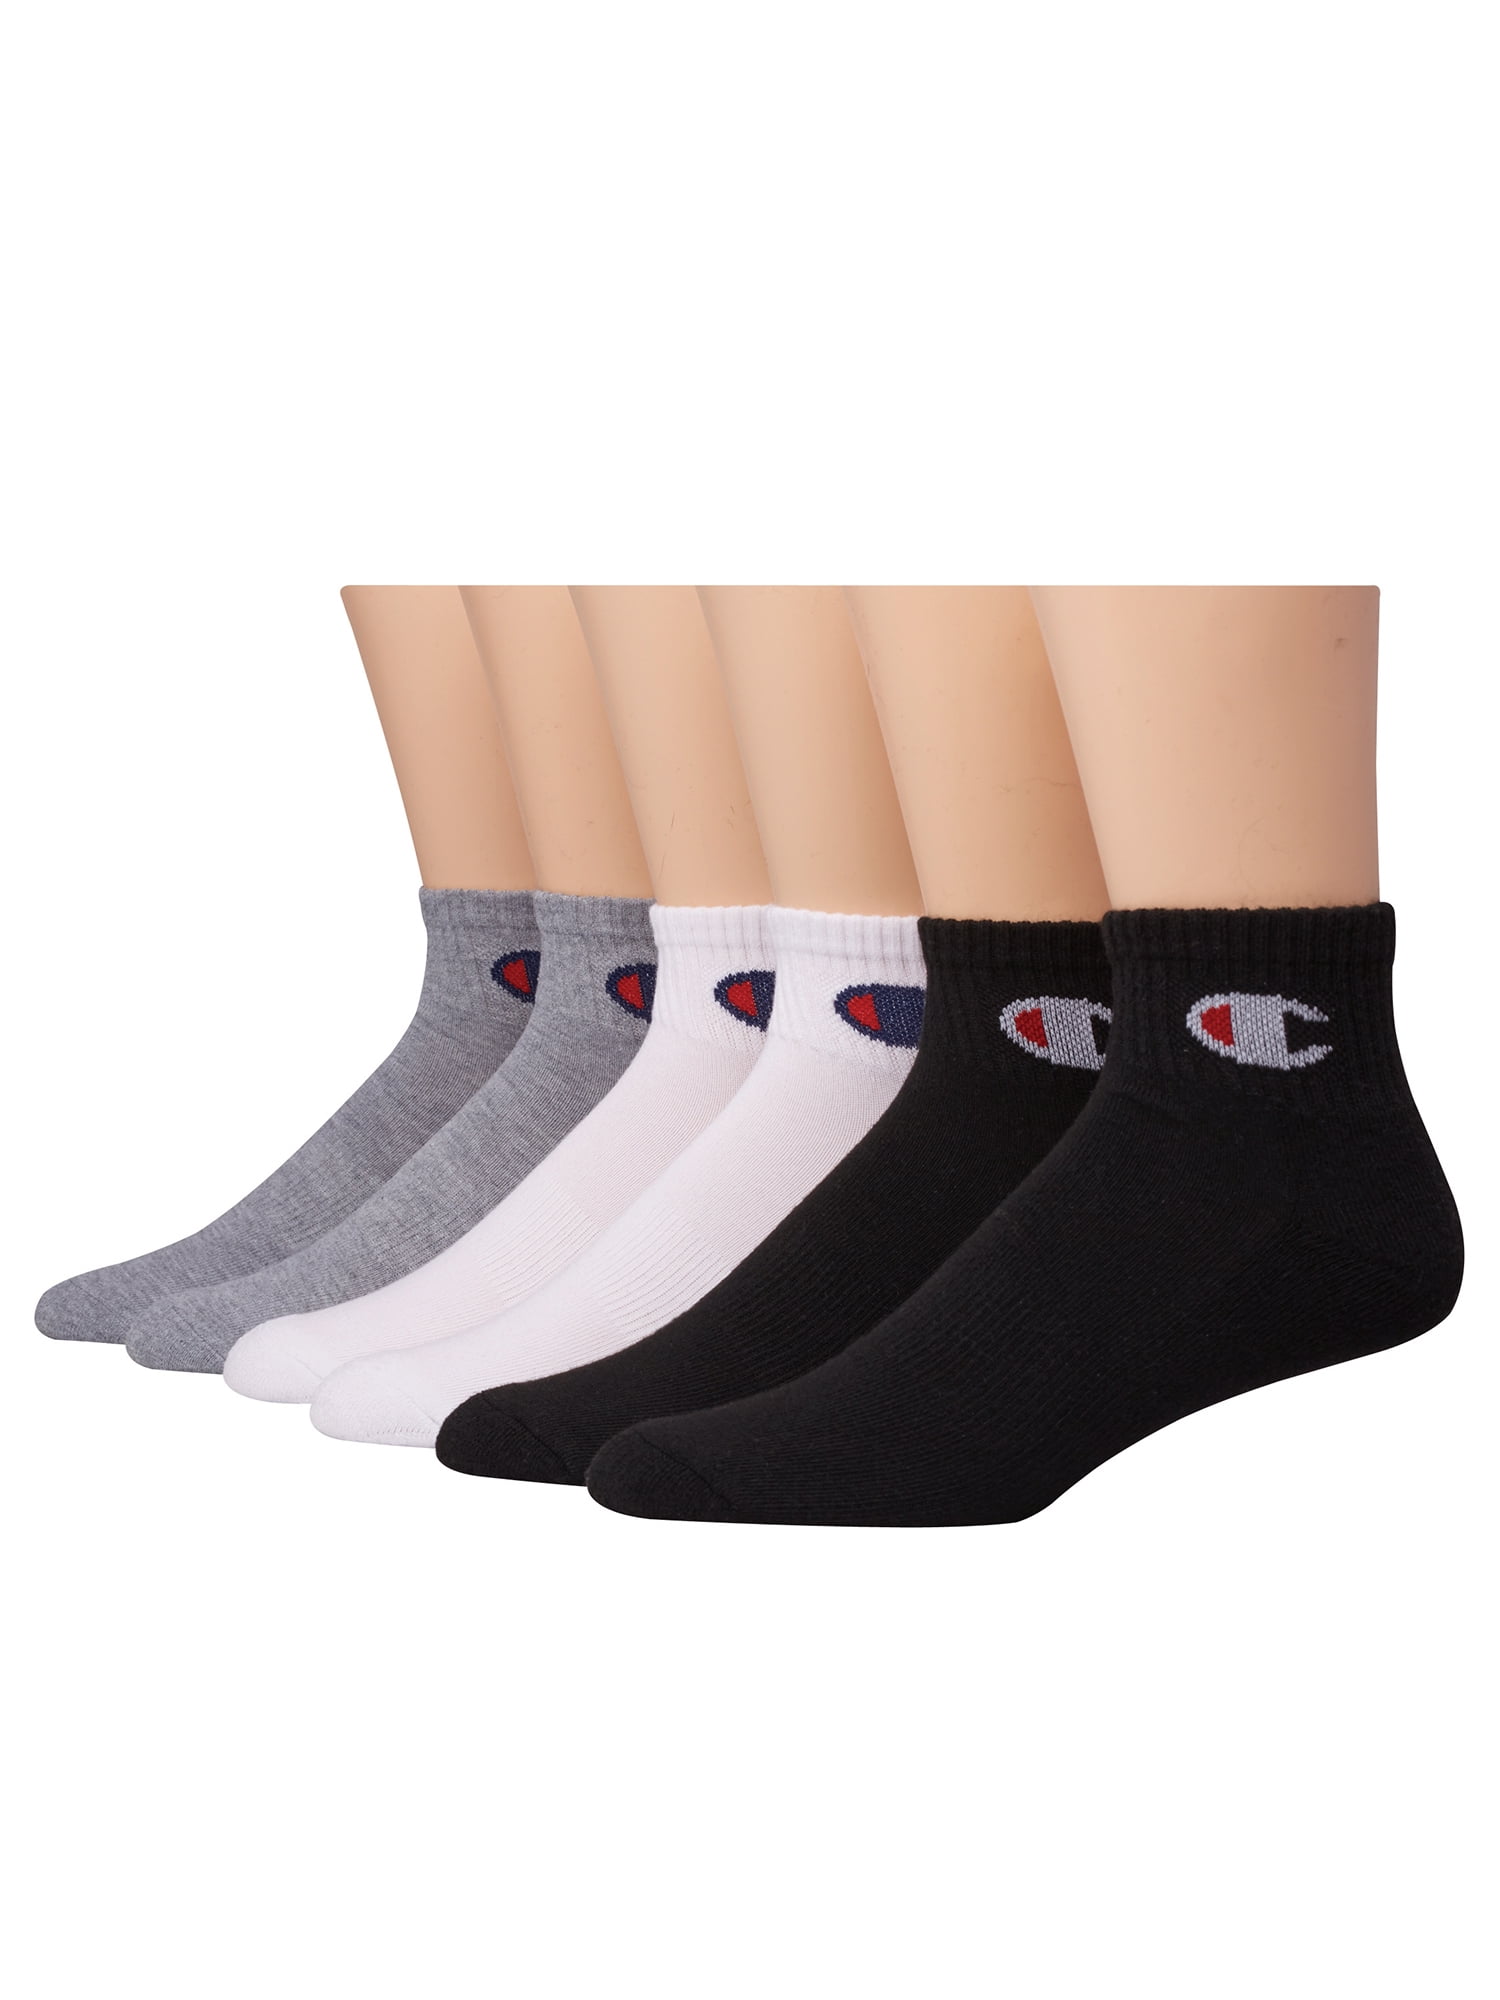 Champion Women's Athletic Ankle Sock, 6 Pack - Walmart.com